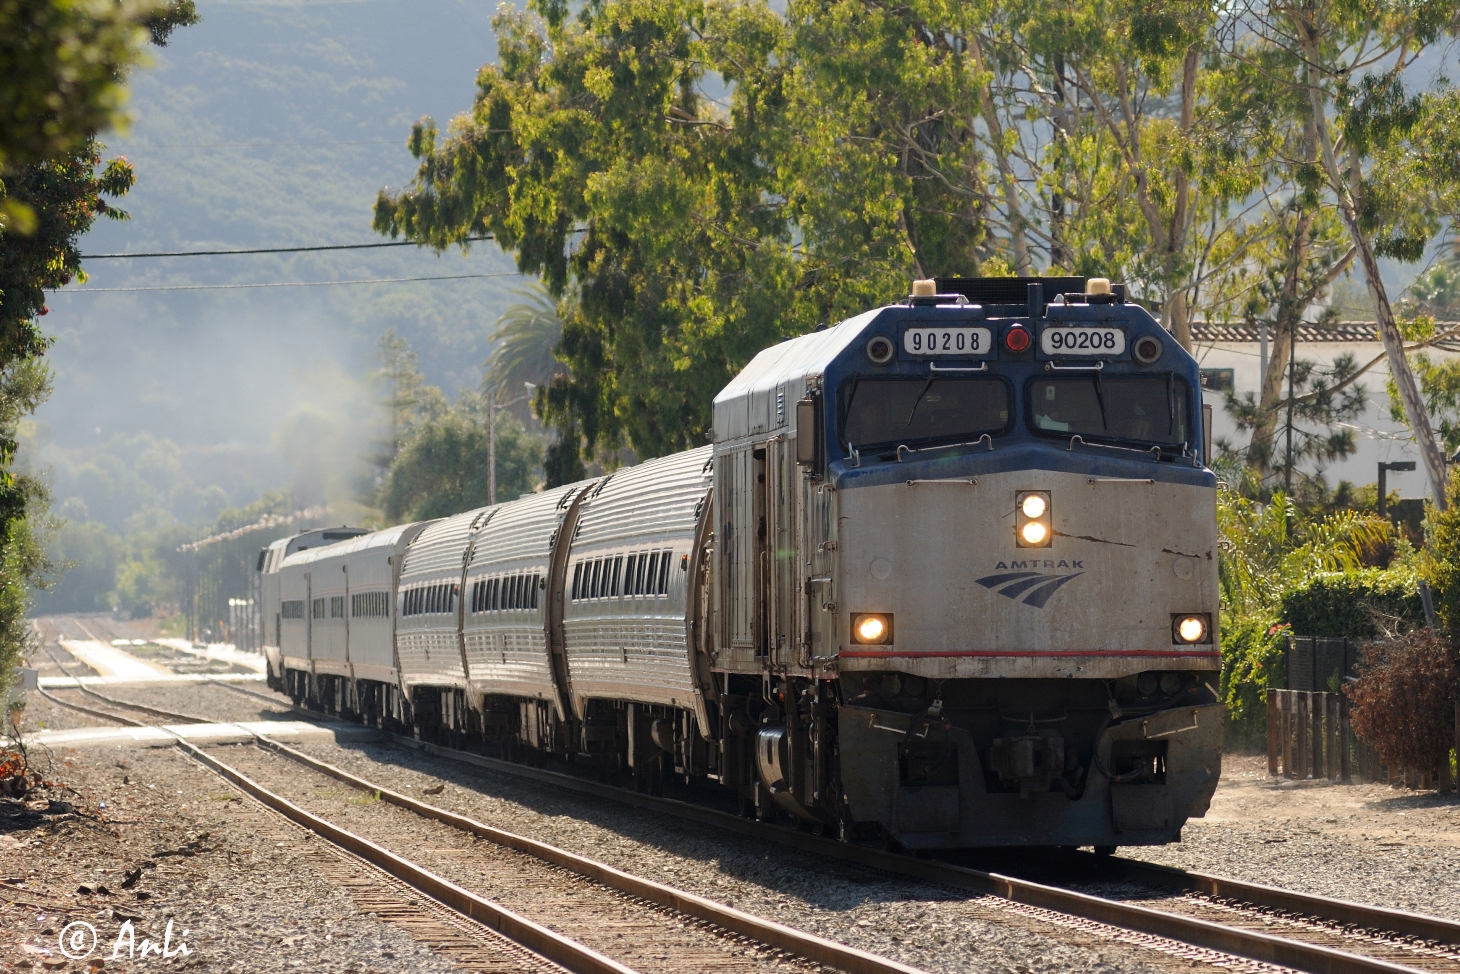 Amtrak in Santa Barbara